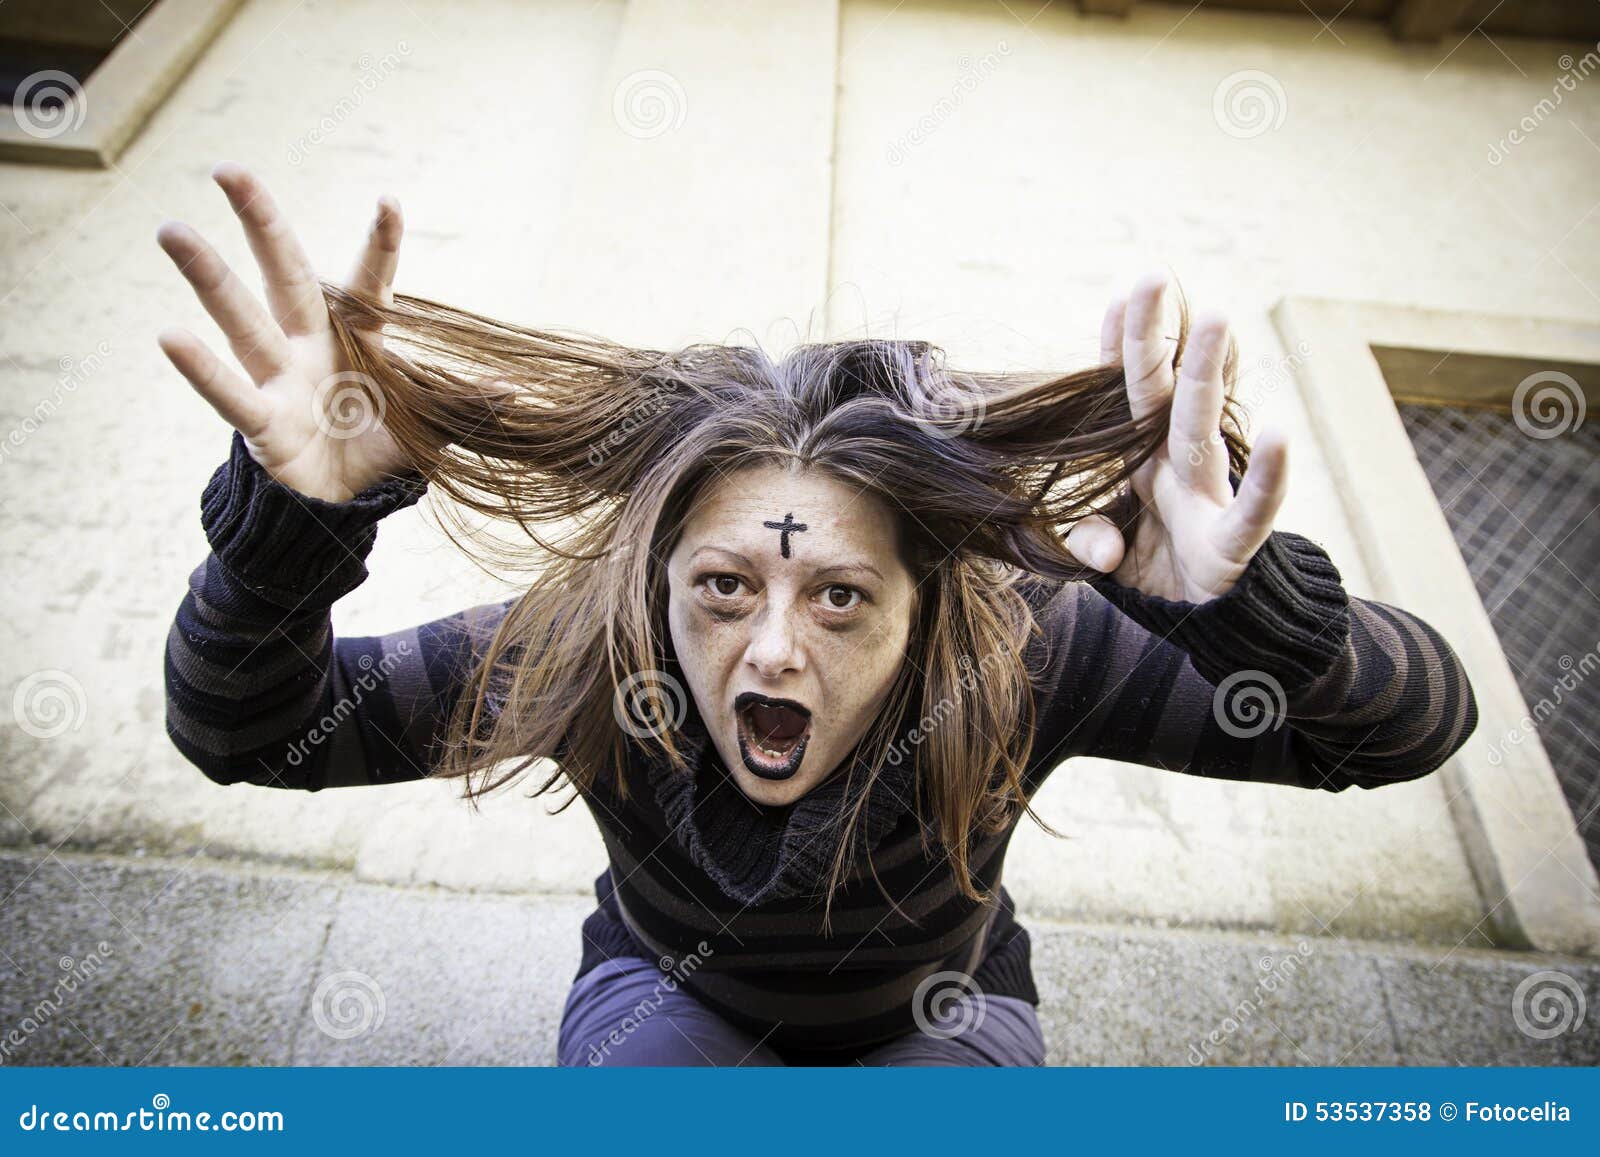 Image result for images of crazed devil women screaming